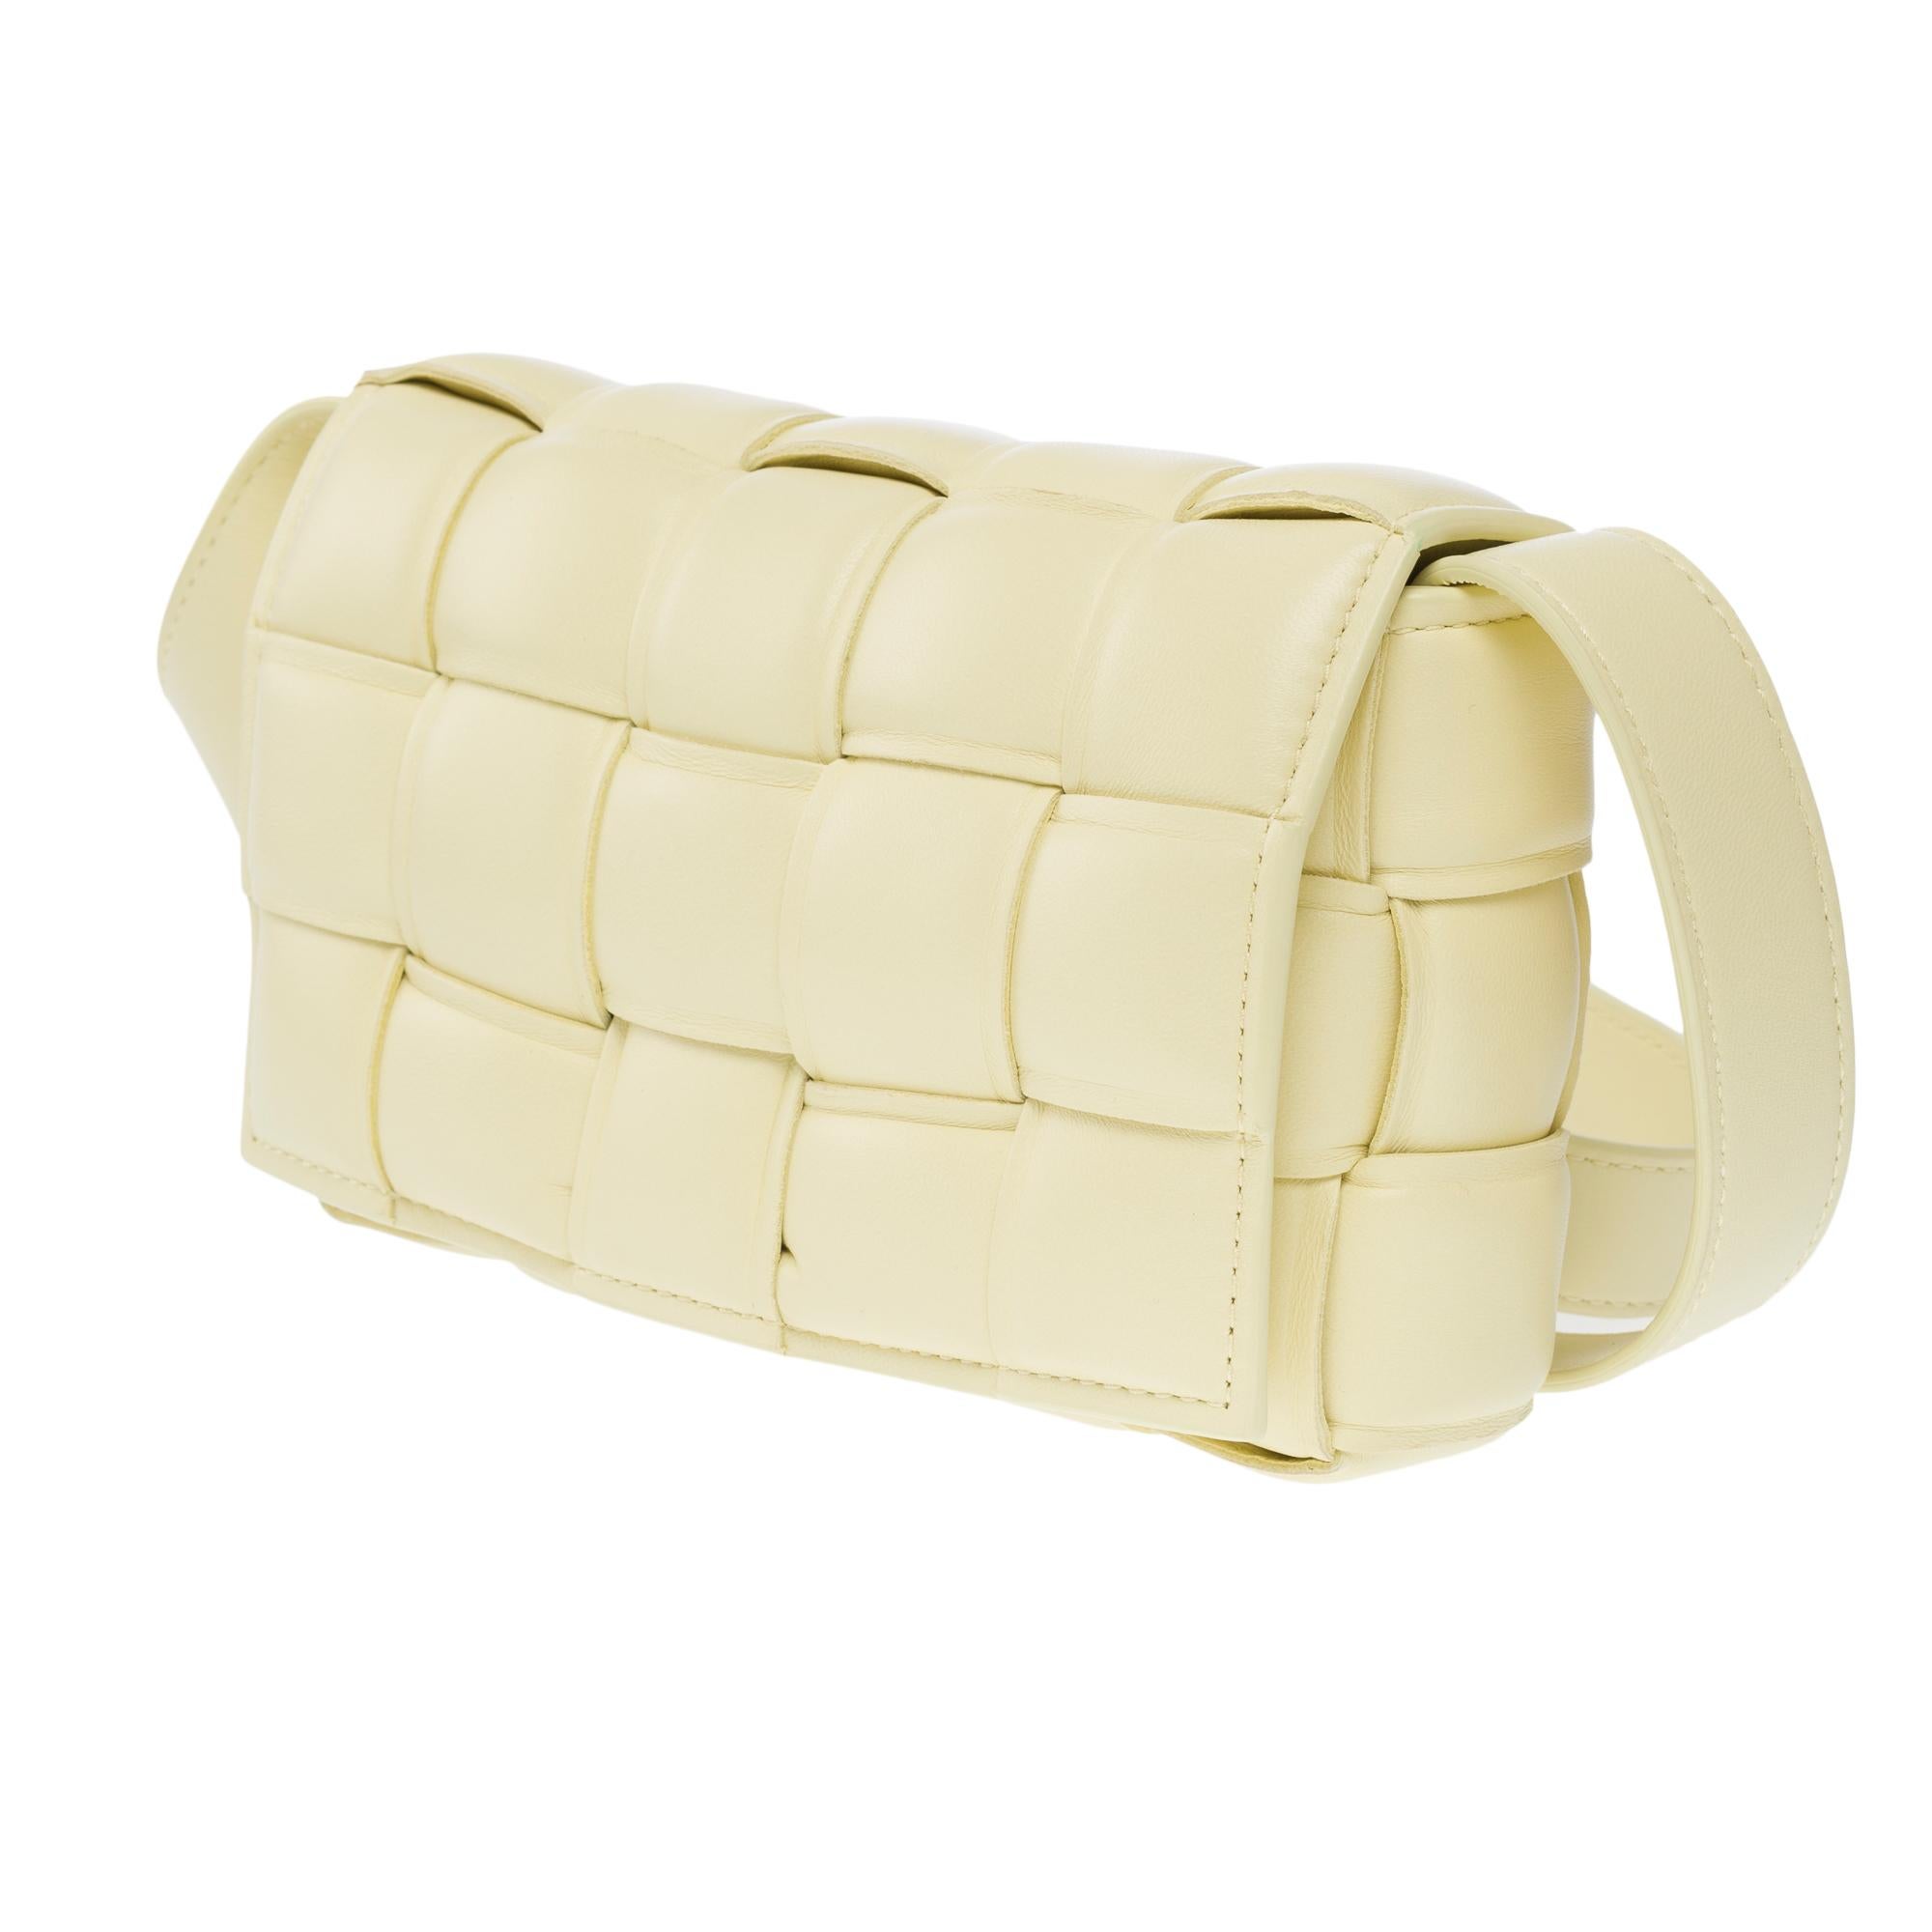 Bottega Veneta Cassette 19 shoulder bag in beige lambskin leather, GHW For Sale 1